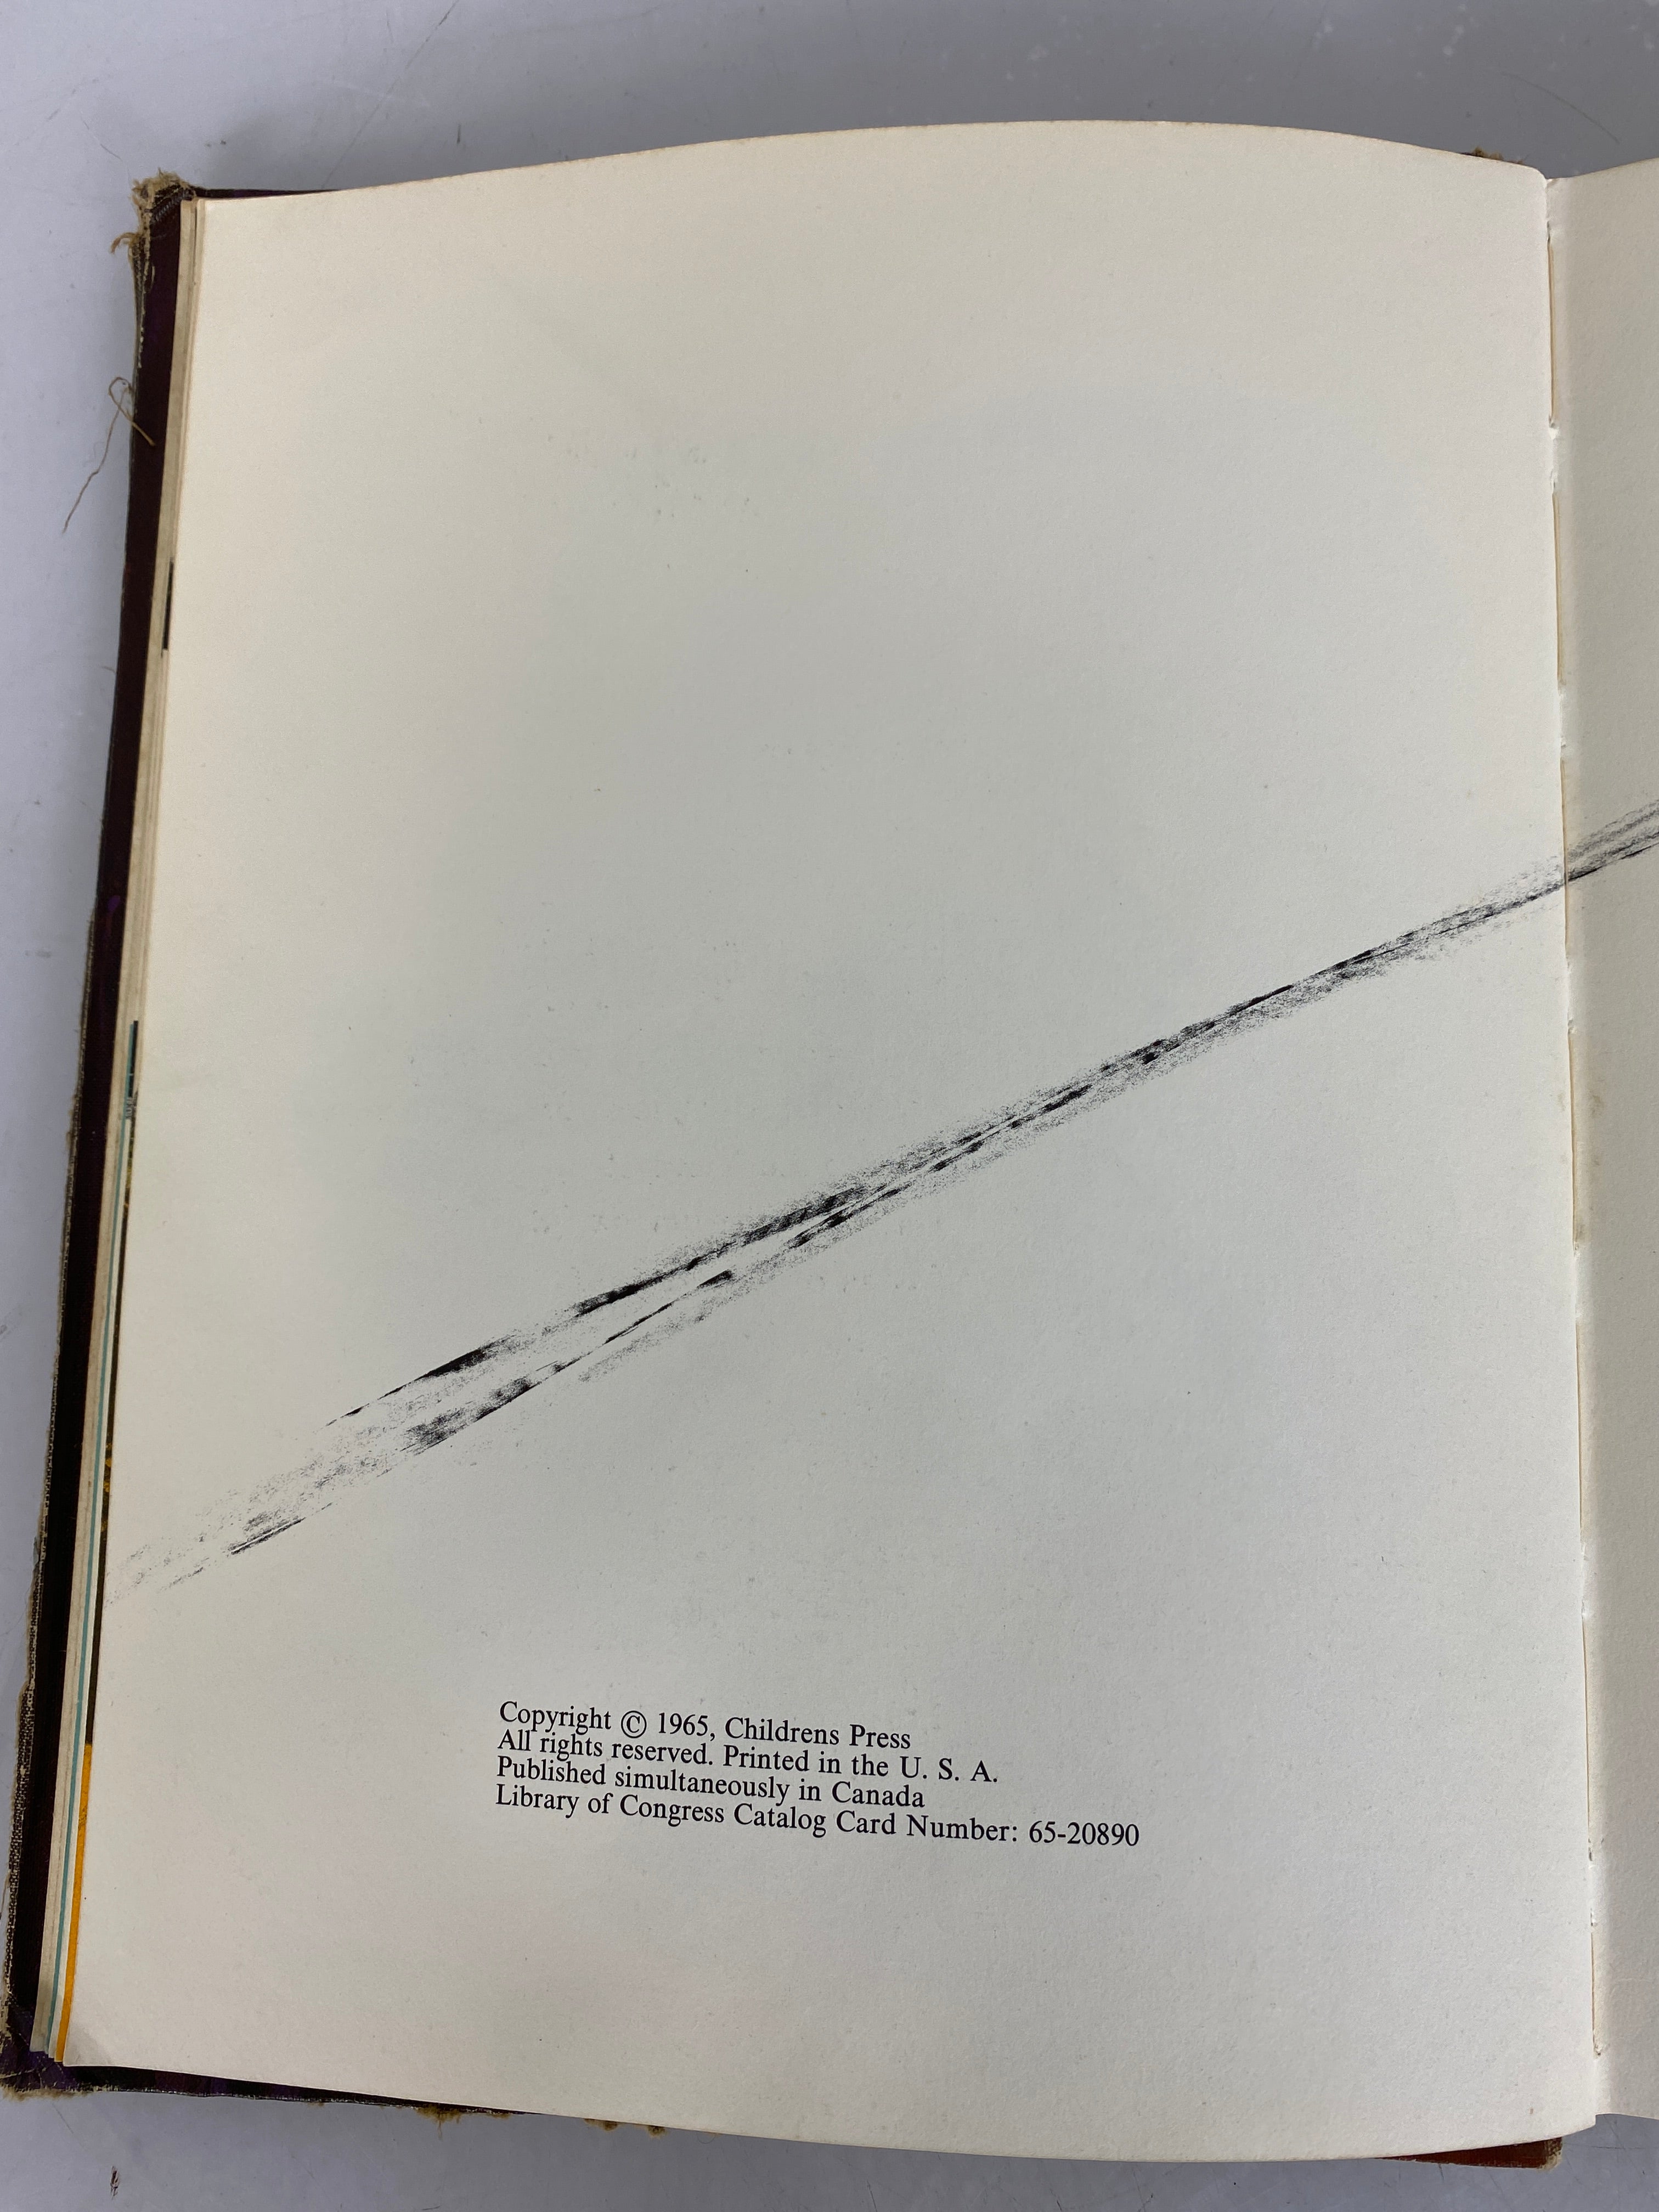 Discovering Aerospace by James V. Pacilio 1965 HC